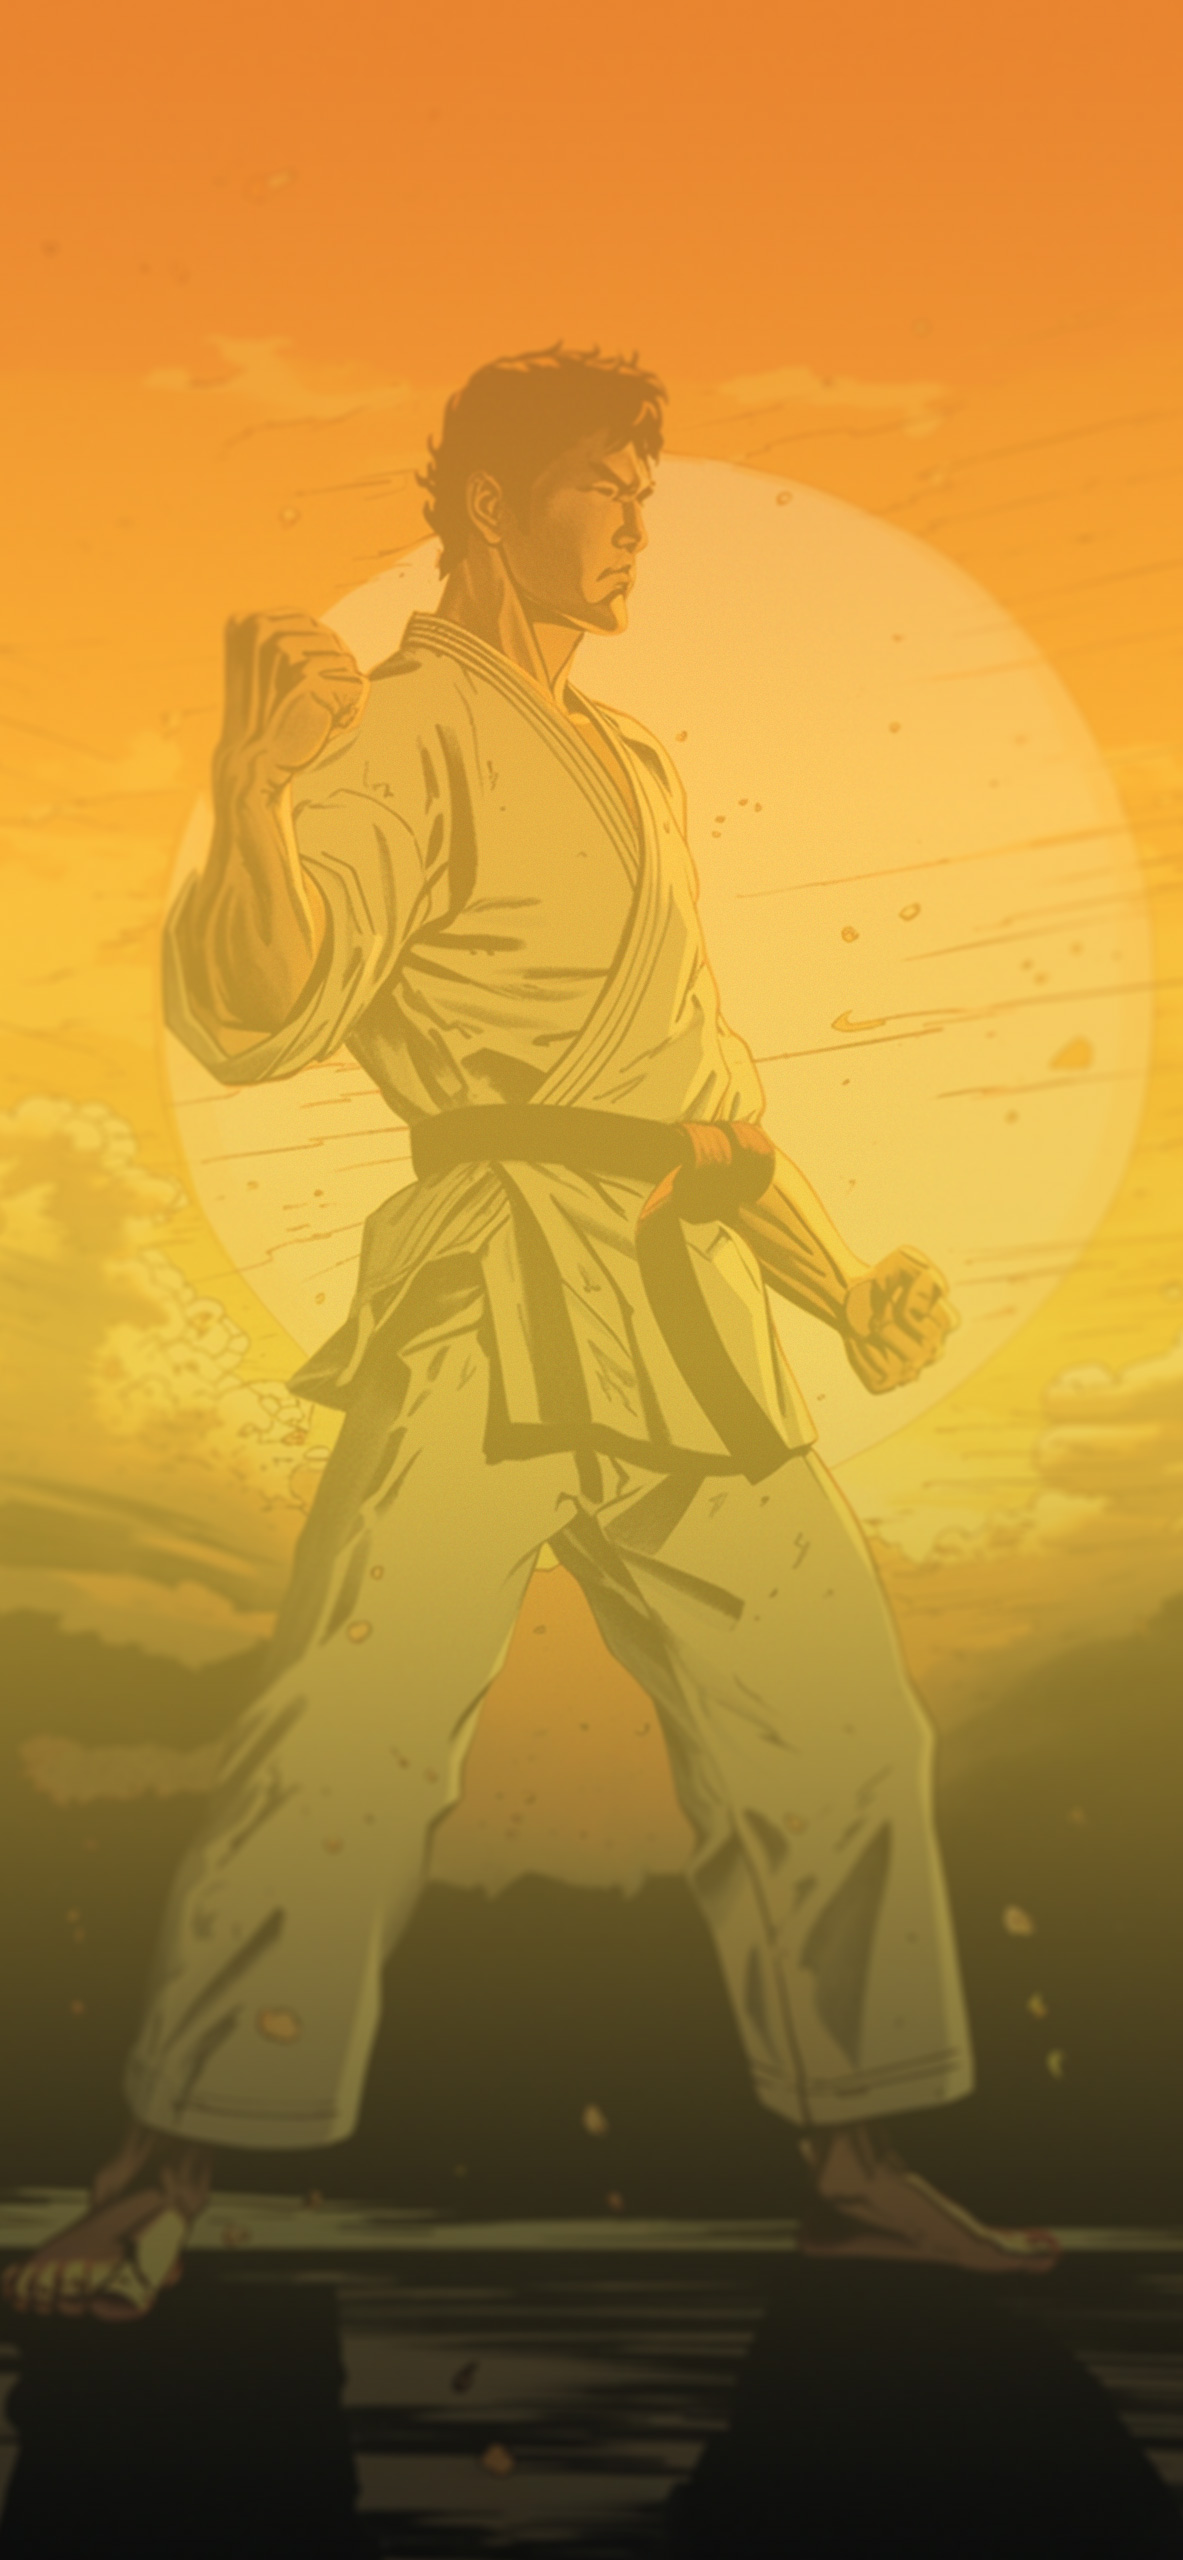 karate sunset art background